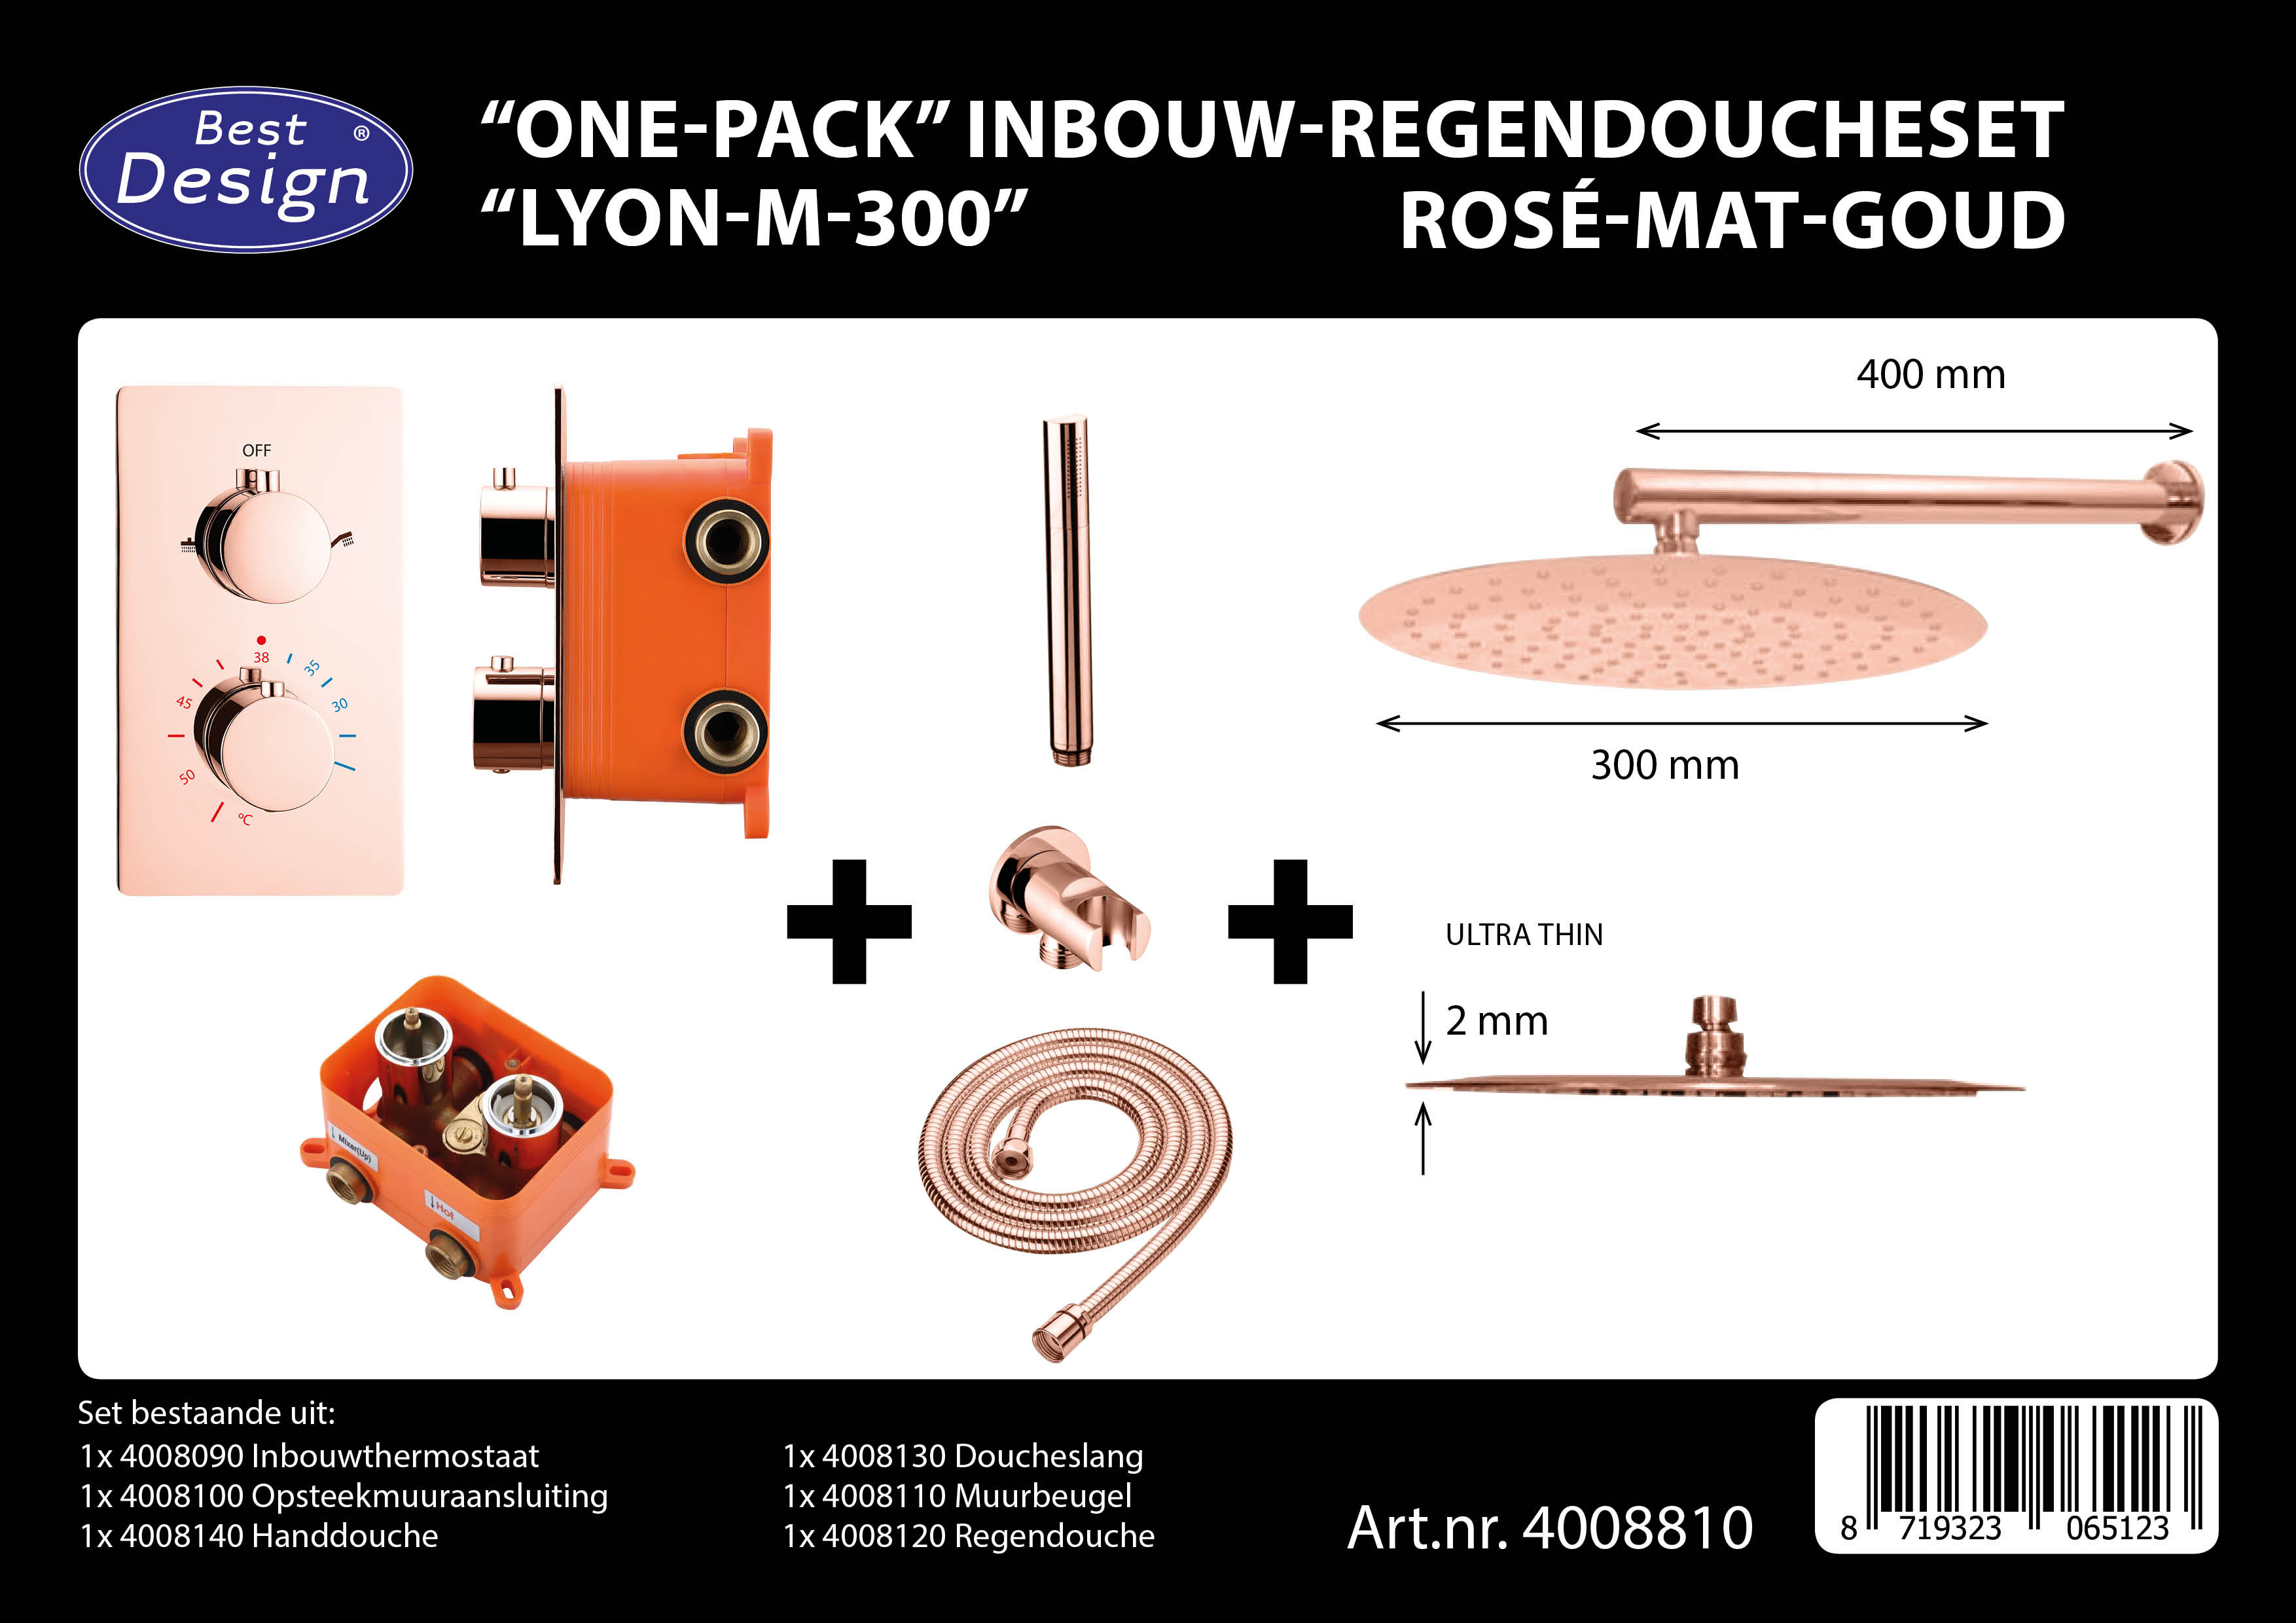 https://www.tegelensanitairmagazijn.nl/72825/best-design-one-pack-inbouw-regendoucheset-lyon-m-300-rose-mat-goud.jpg